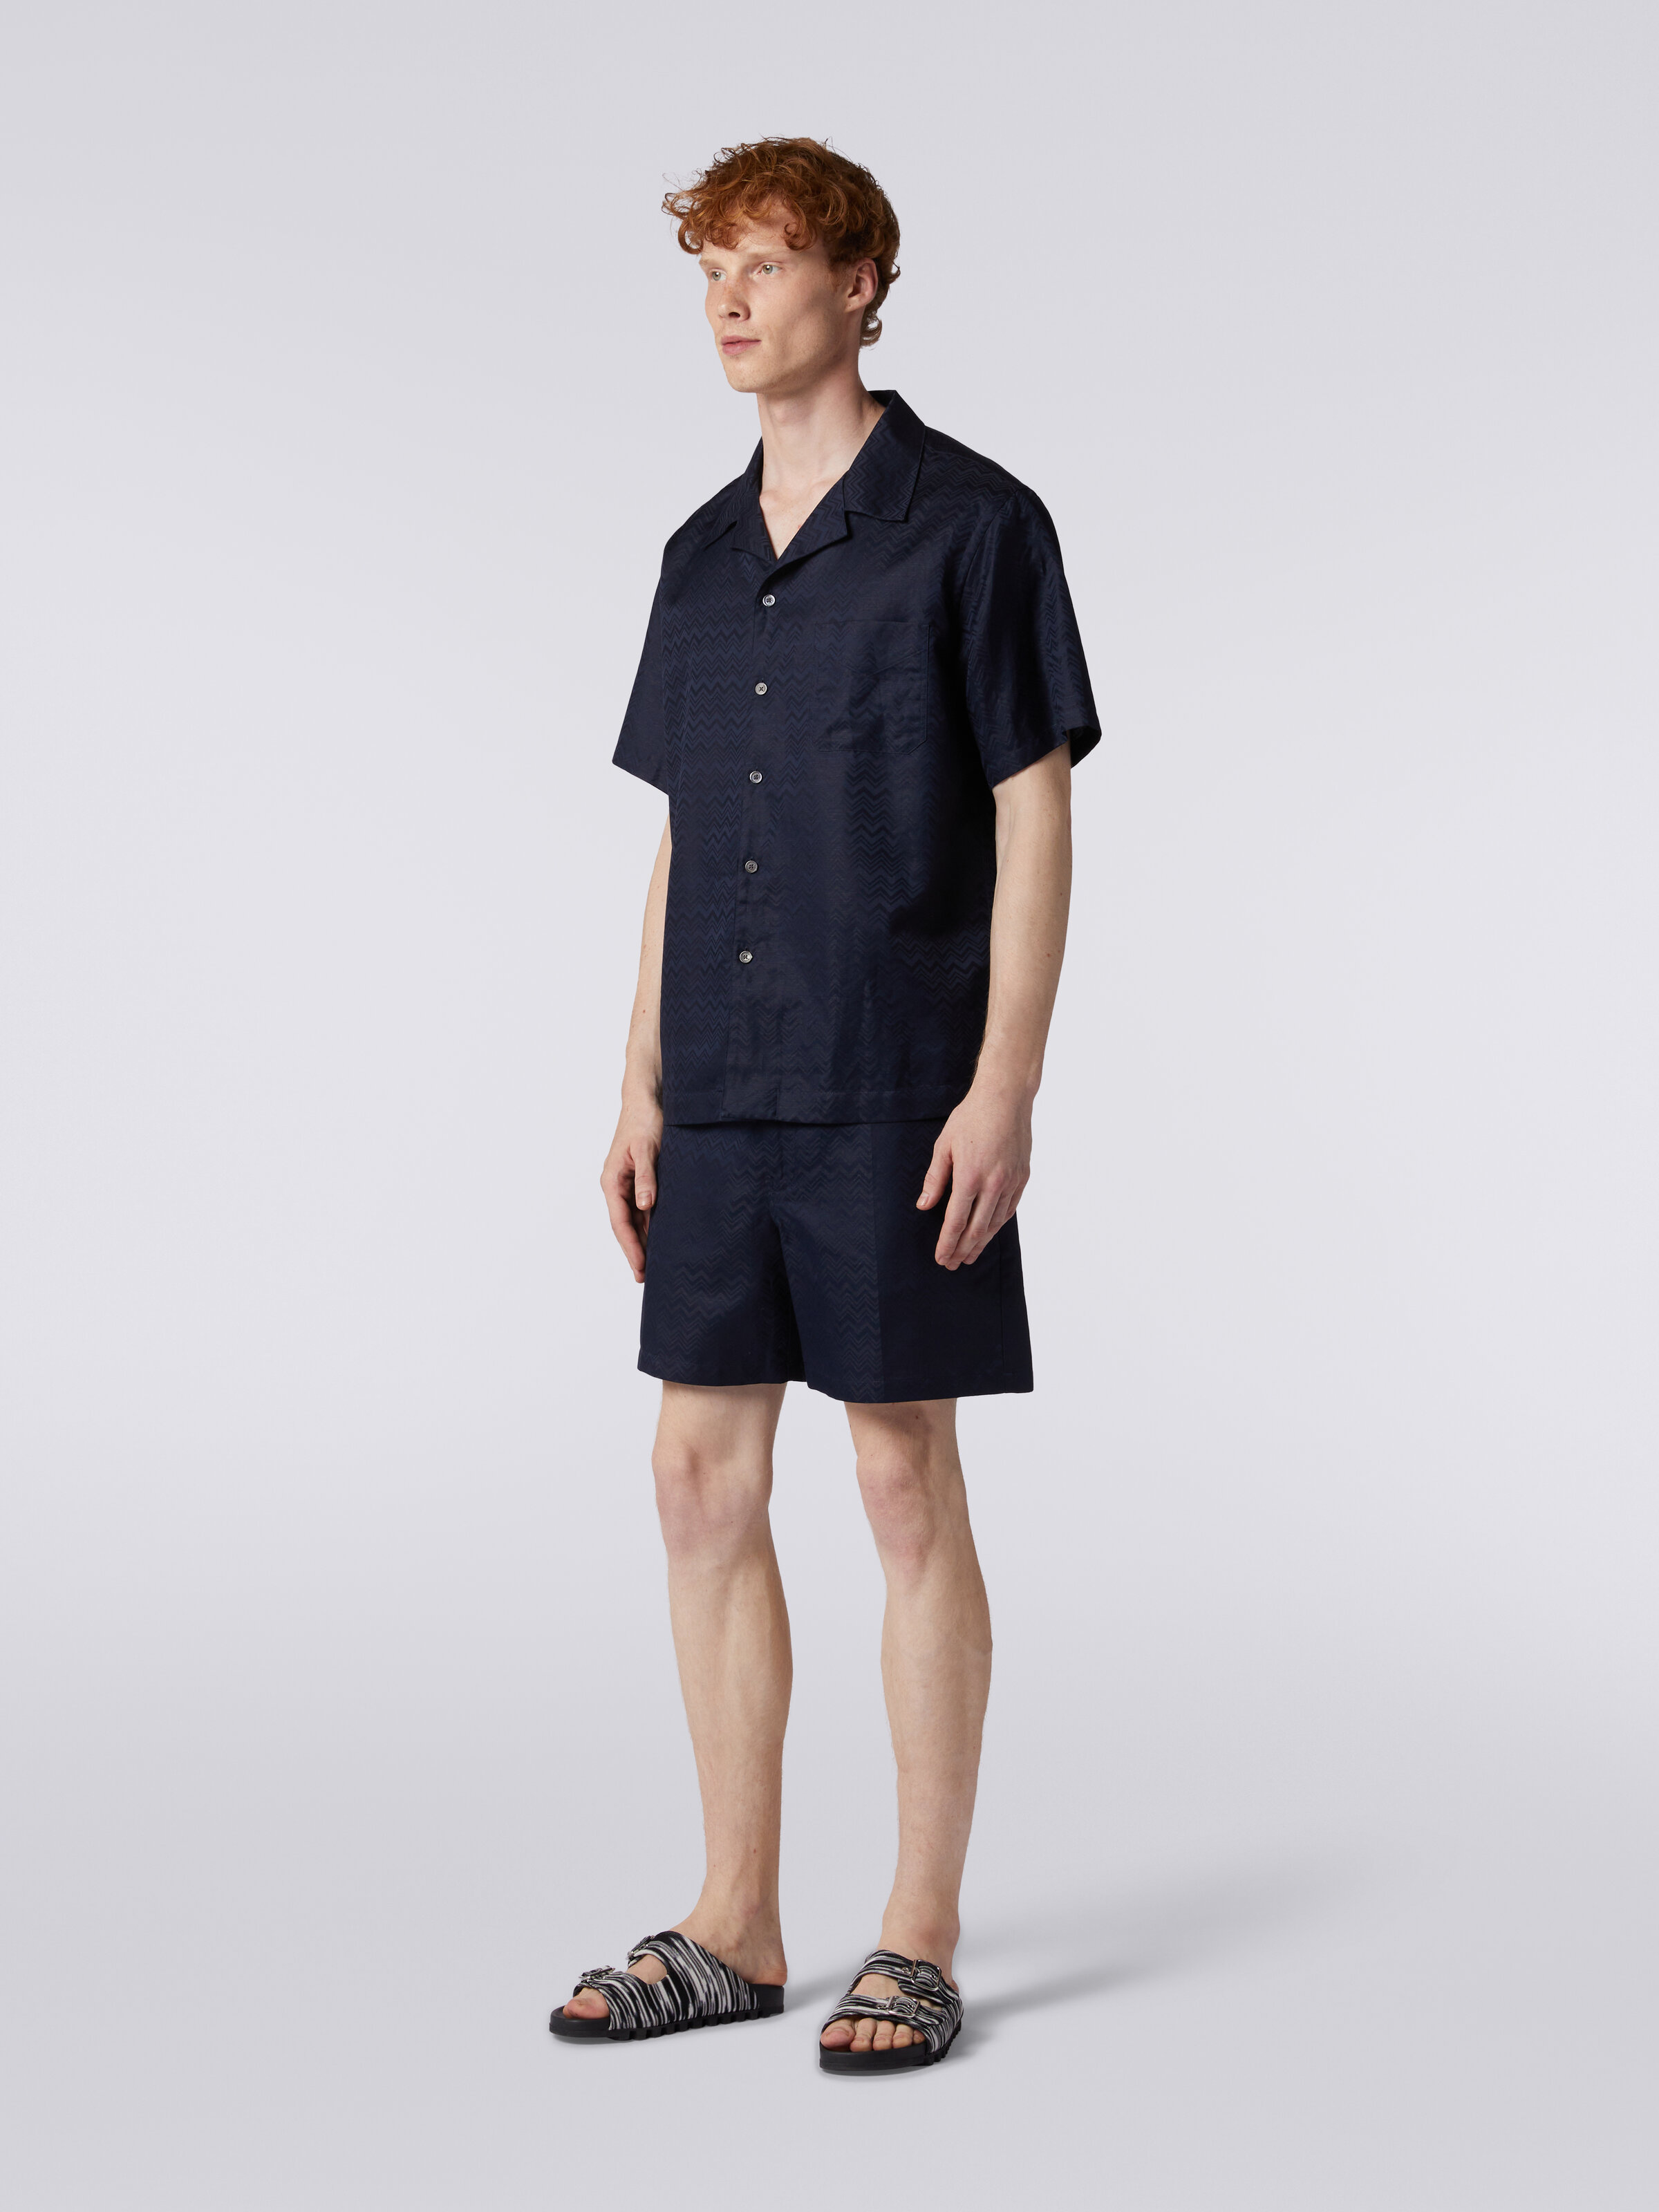 Short-sleeved chevron cotton blend bowling shirt, Dark Blue - 2